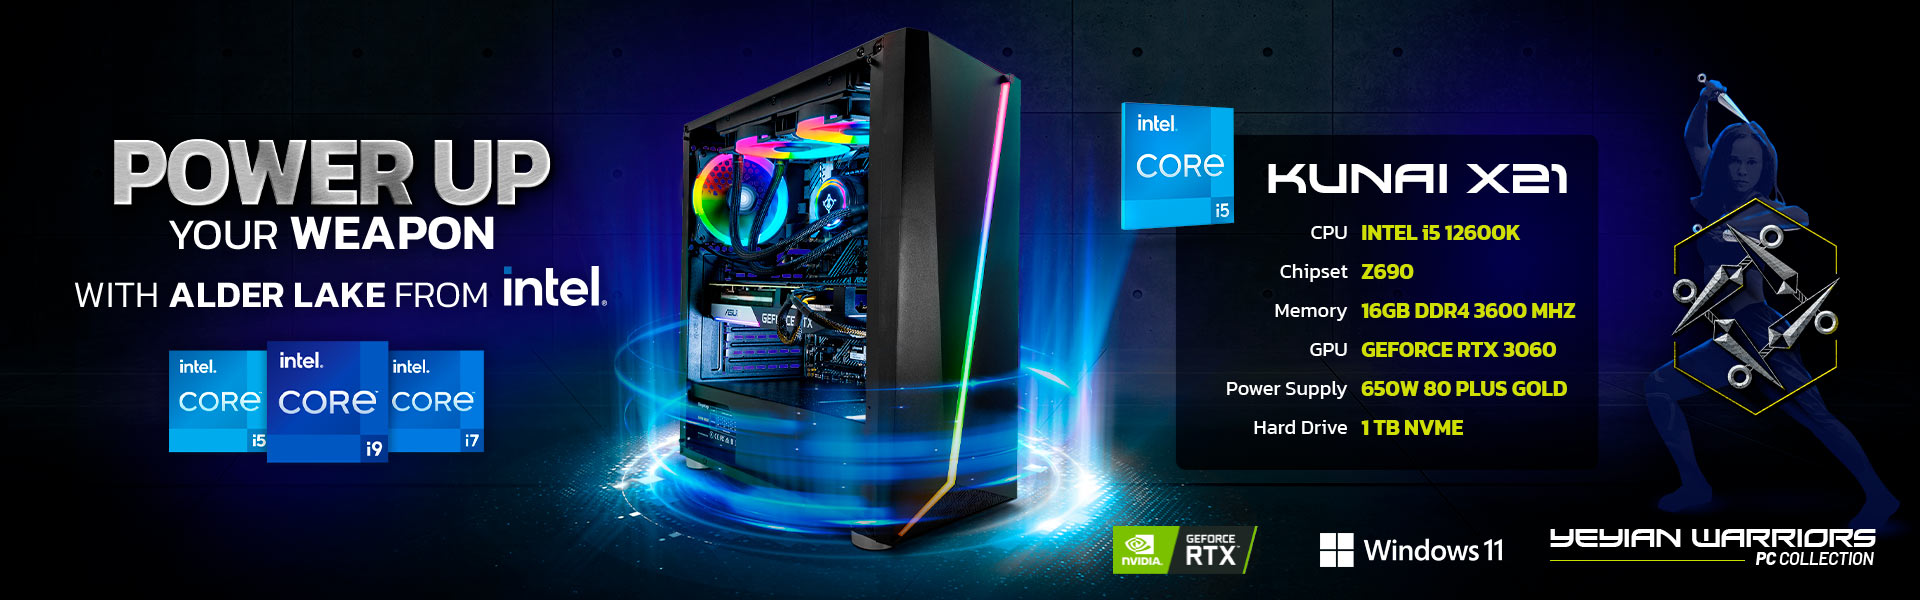 Yeyian Gaming Desktop Kunai X21 Intel Core i5 12th Gen 12600K (3.70GHz ...